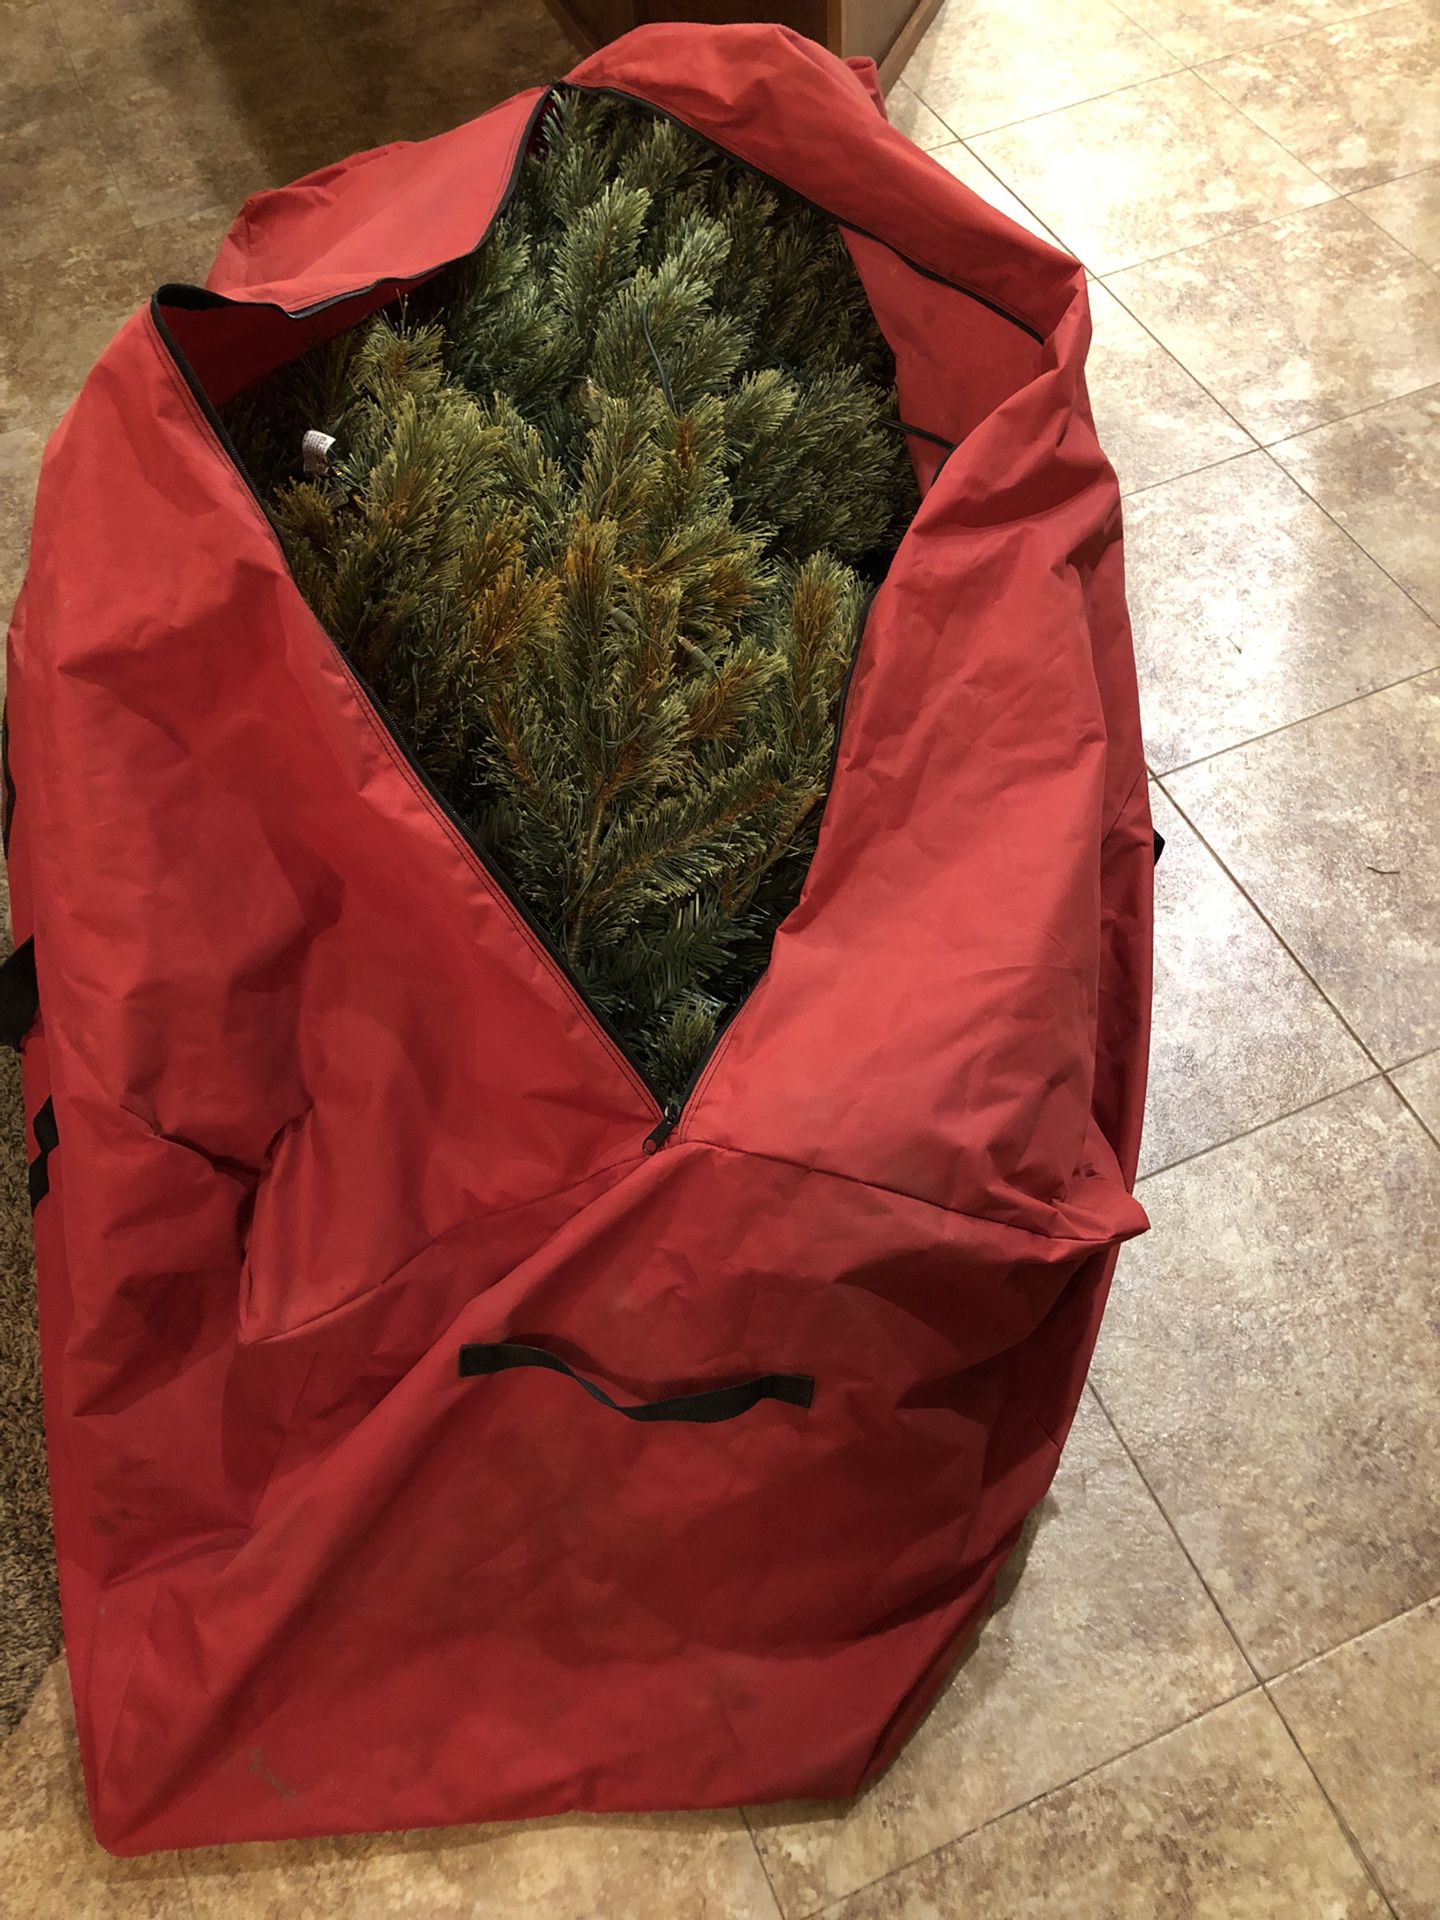 Free - Artificial Christmas Tree W/stand & Bag